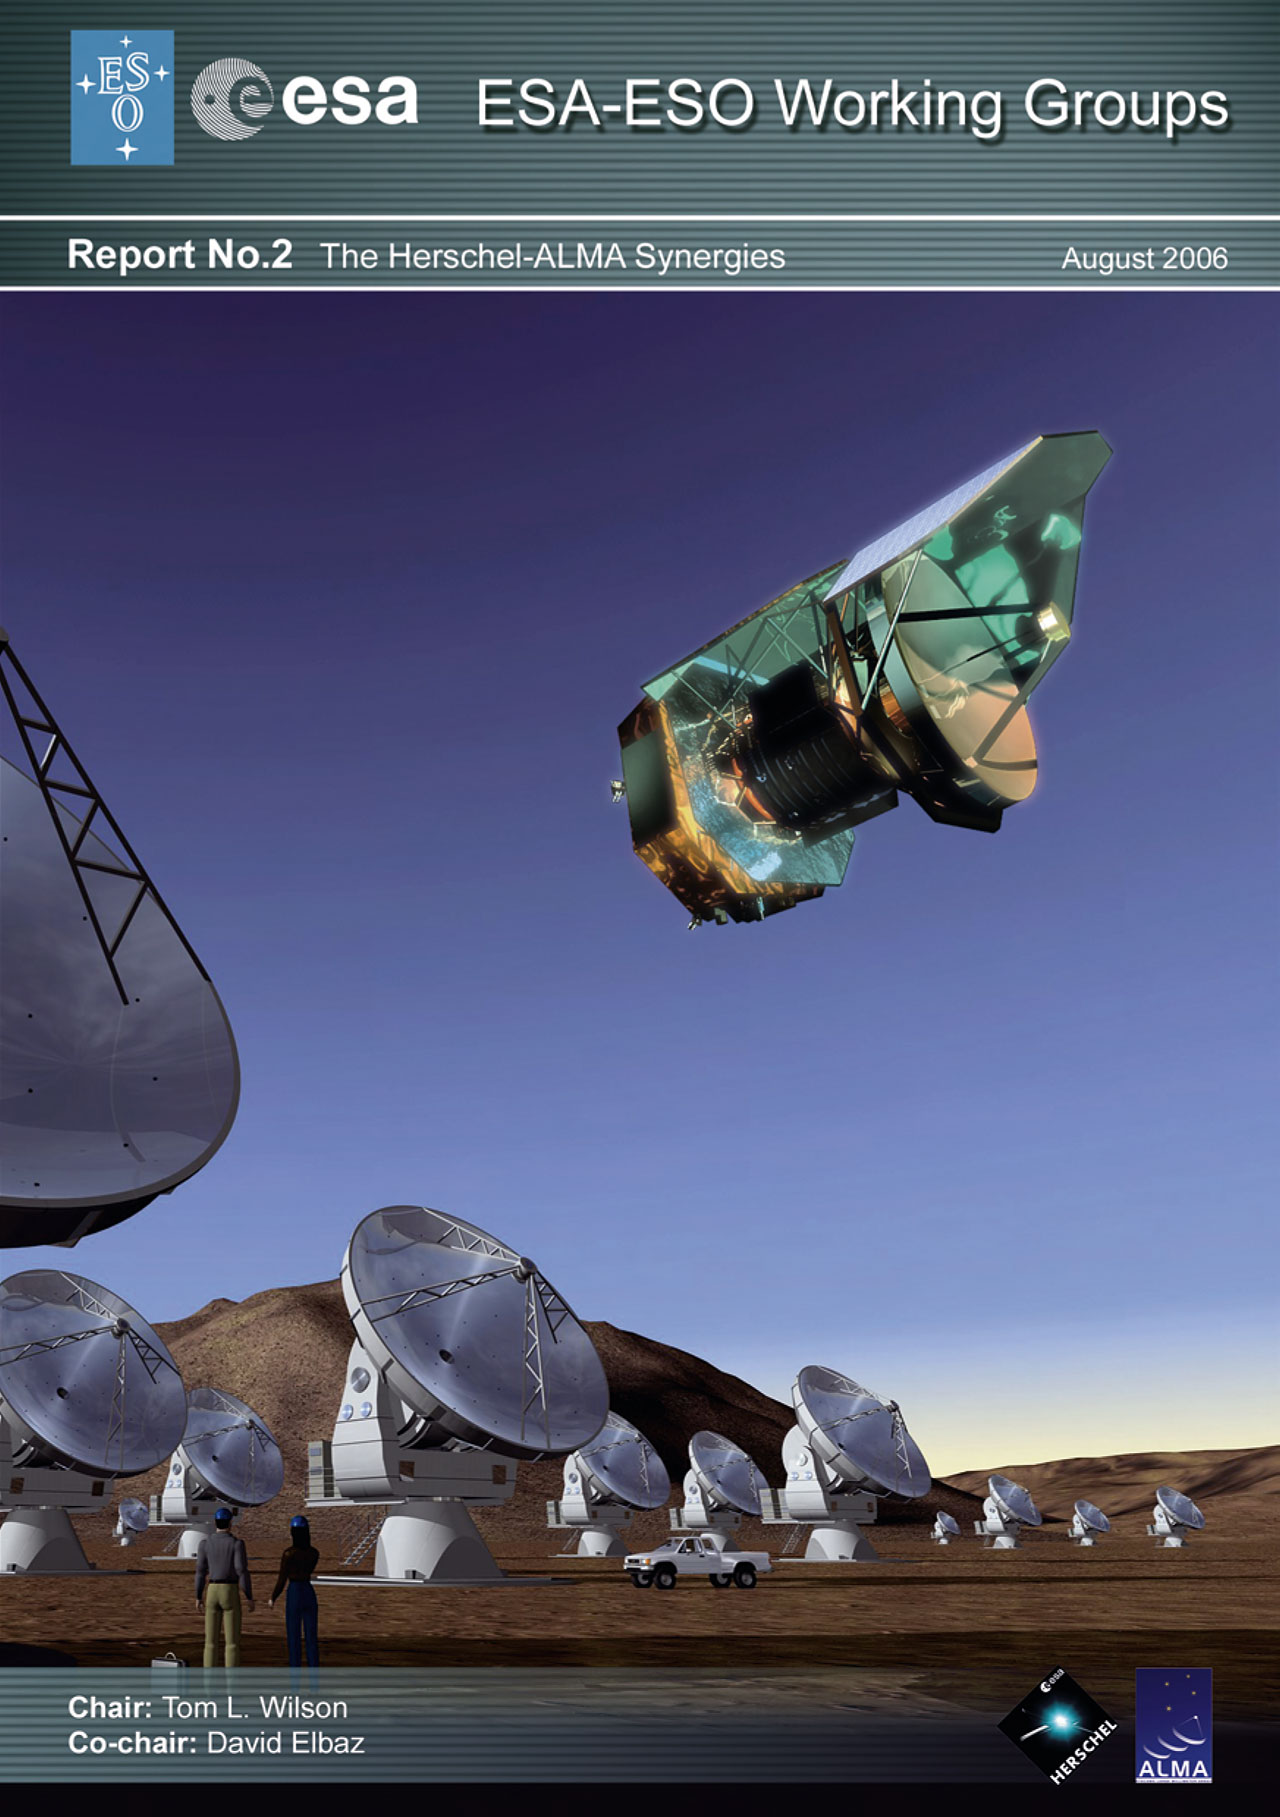 ESA-ESO WG report on Herschel-ALMA Synergies (August 2006)